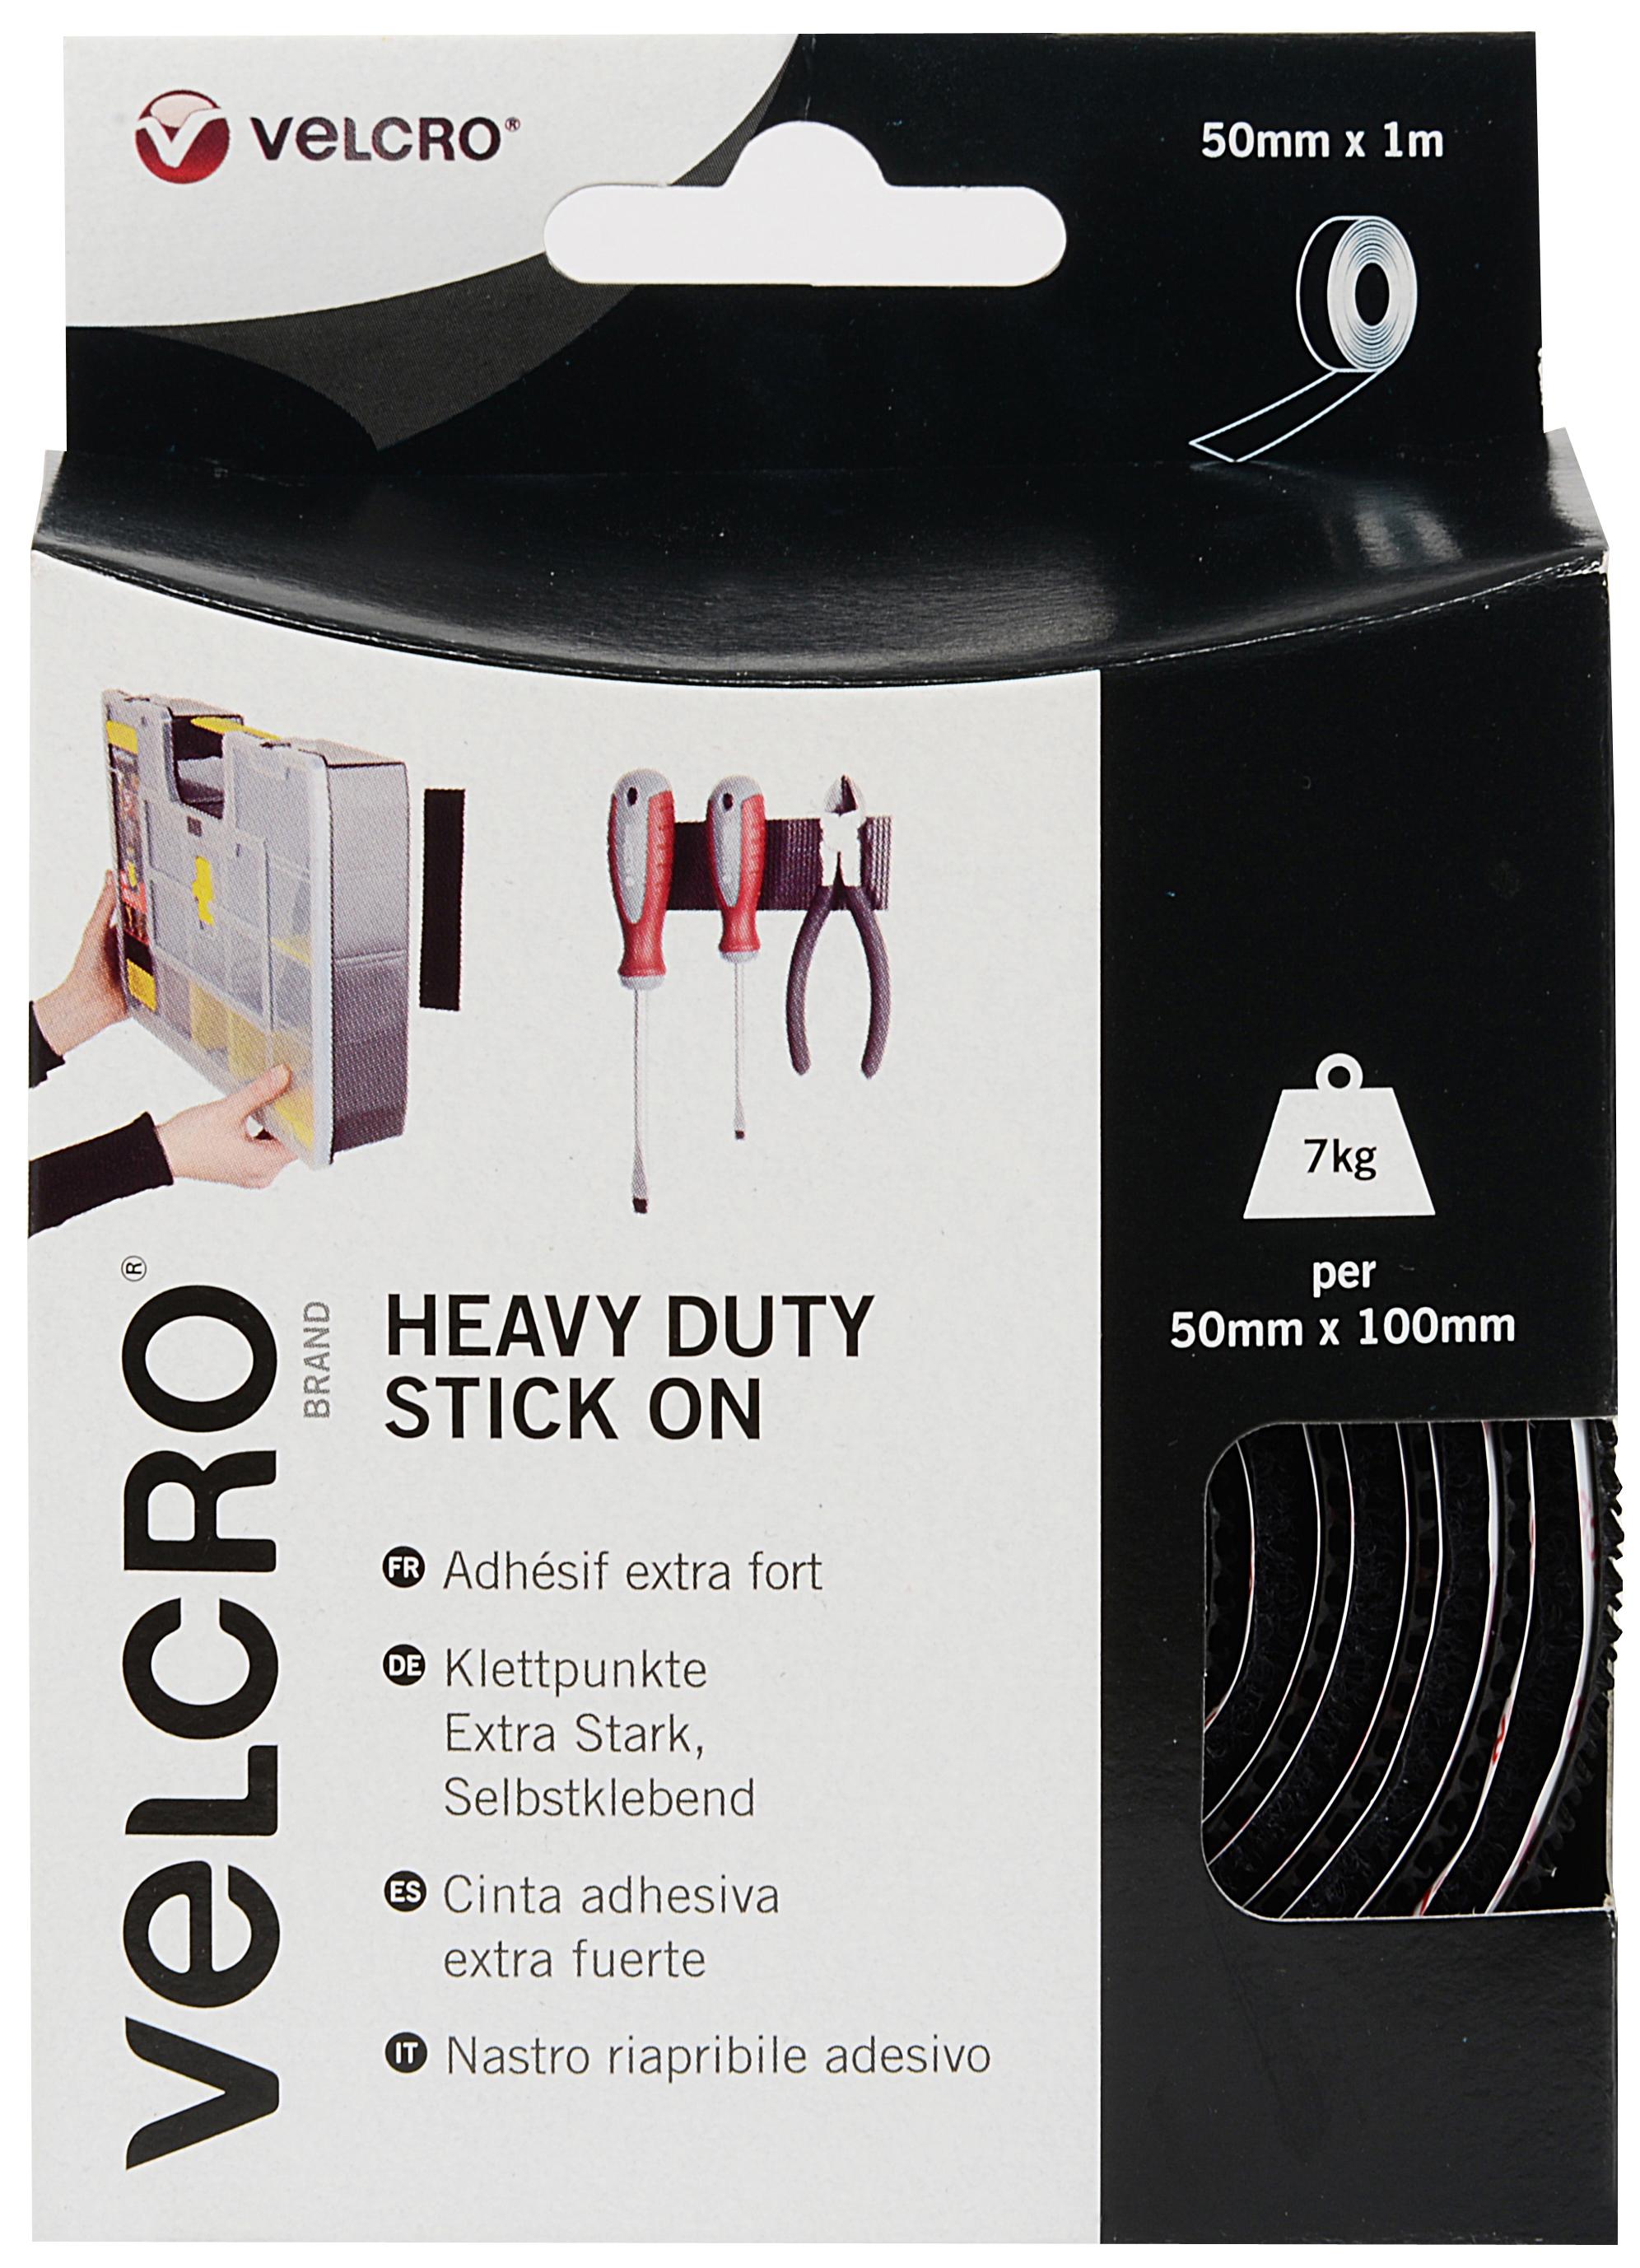 Velcro Heavy Duty Stick On Tape (Black)